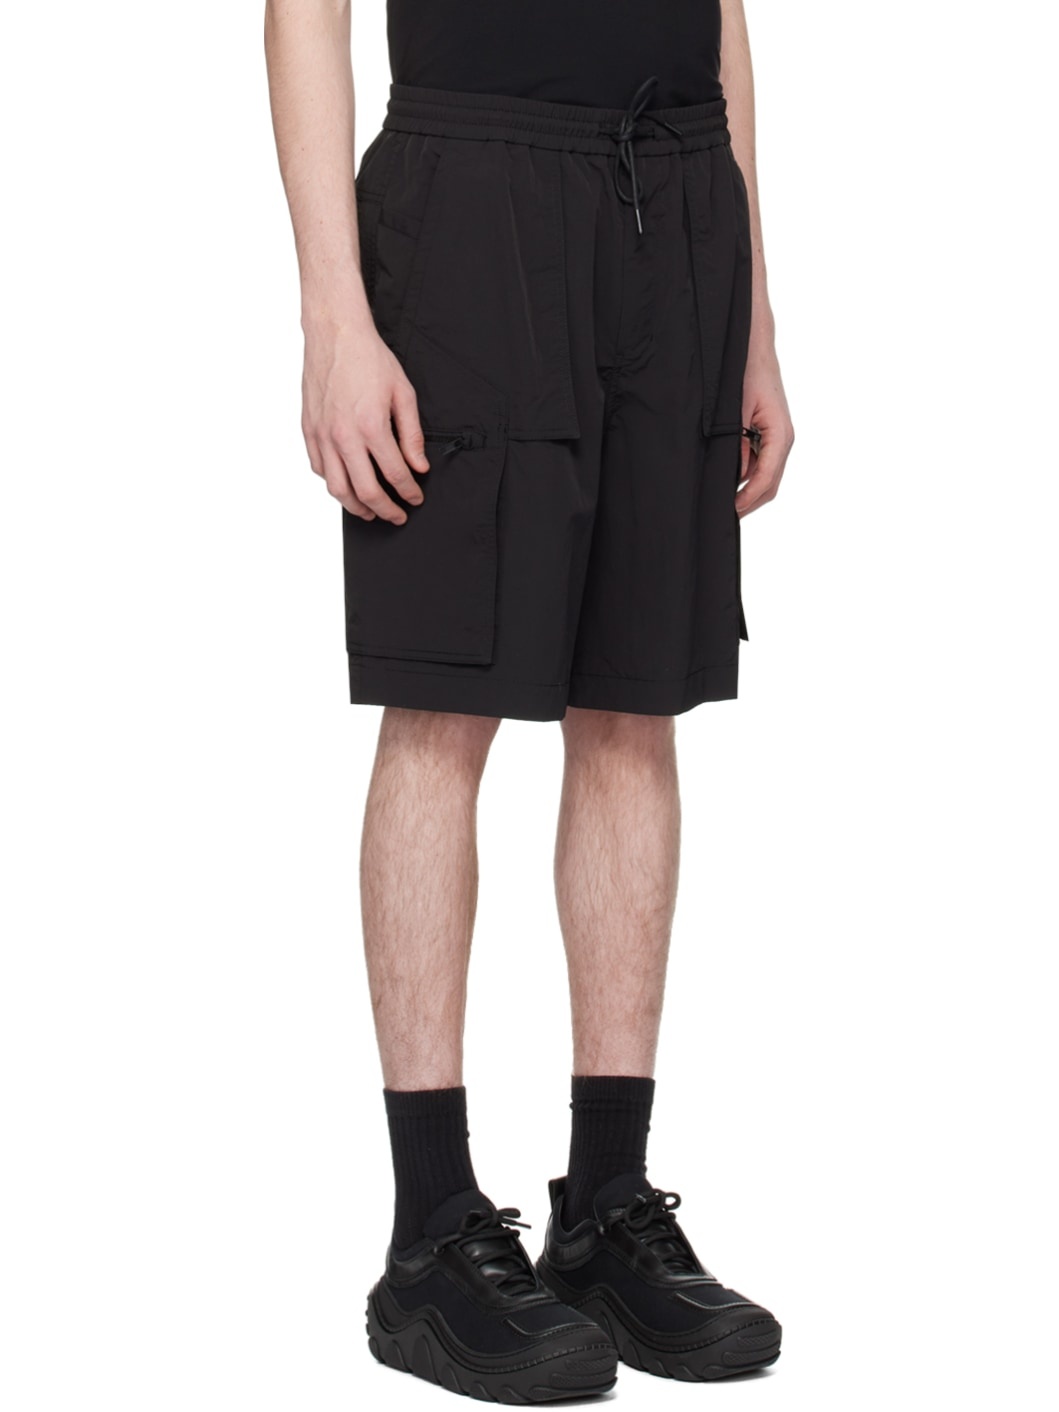 Black Zip Shorts - 2